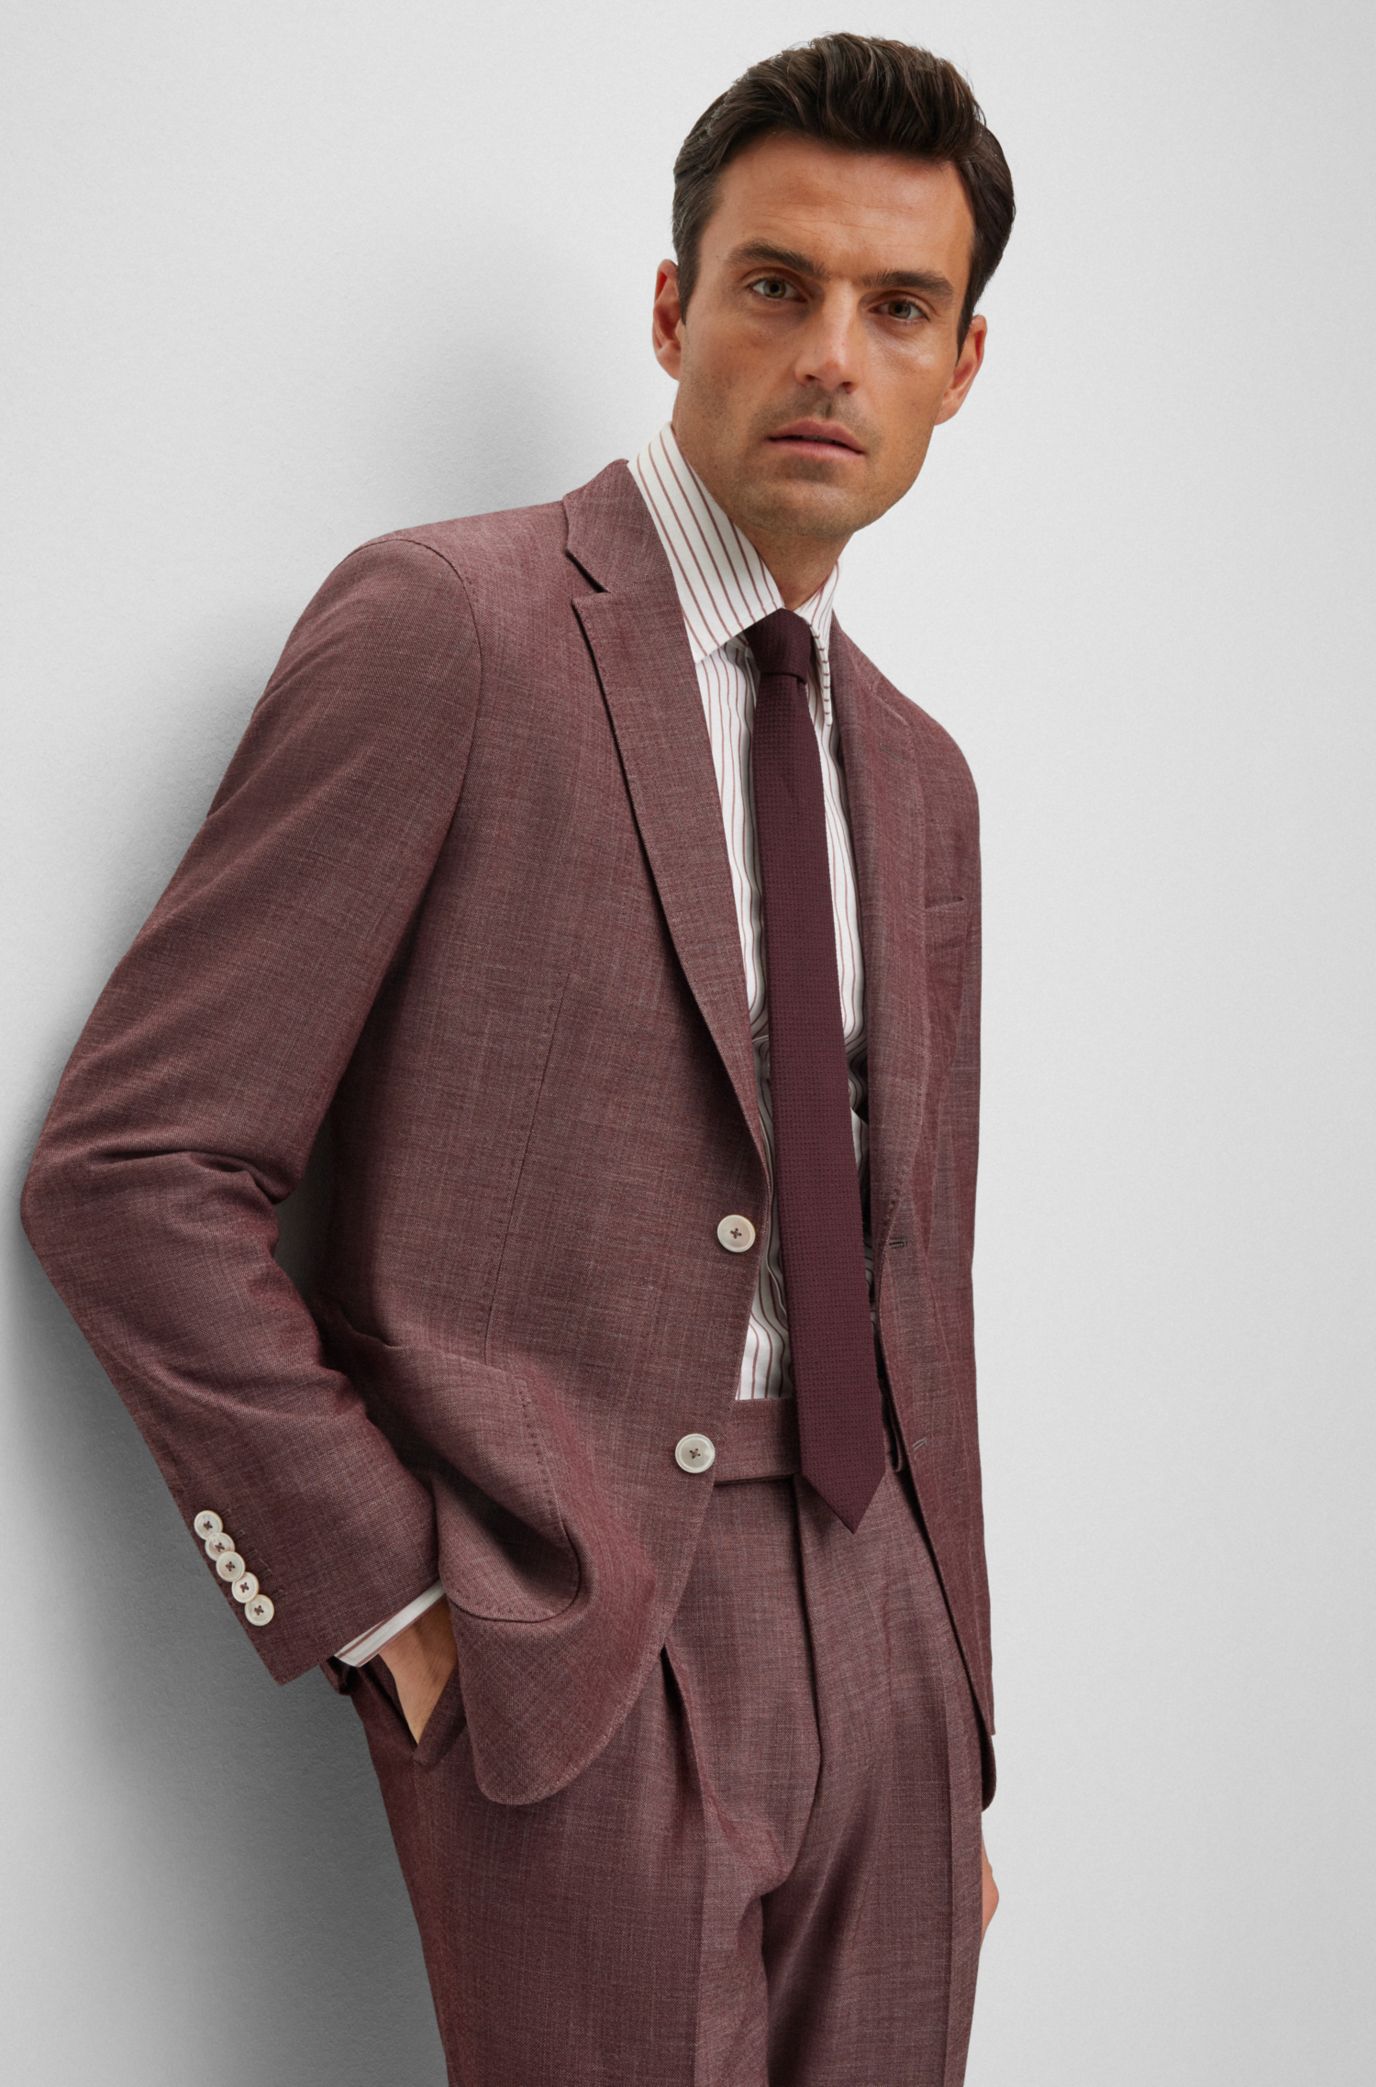 BOSS - Slim-fit suit in a patterned wool blend